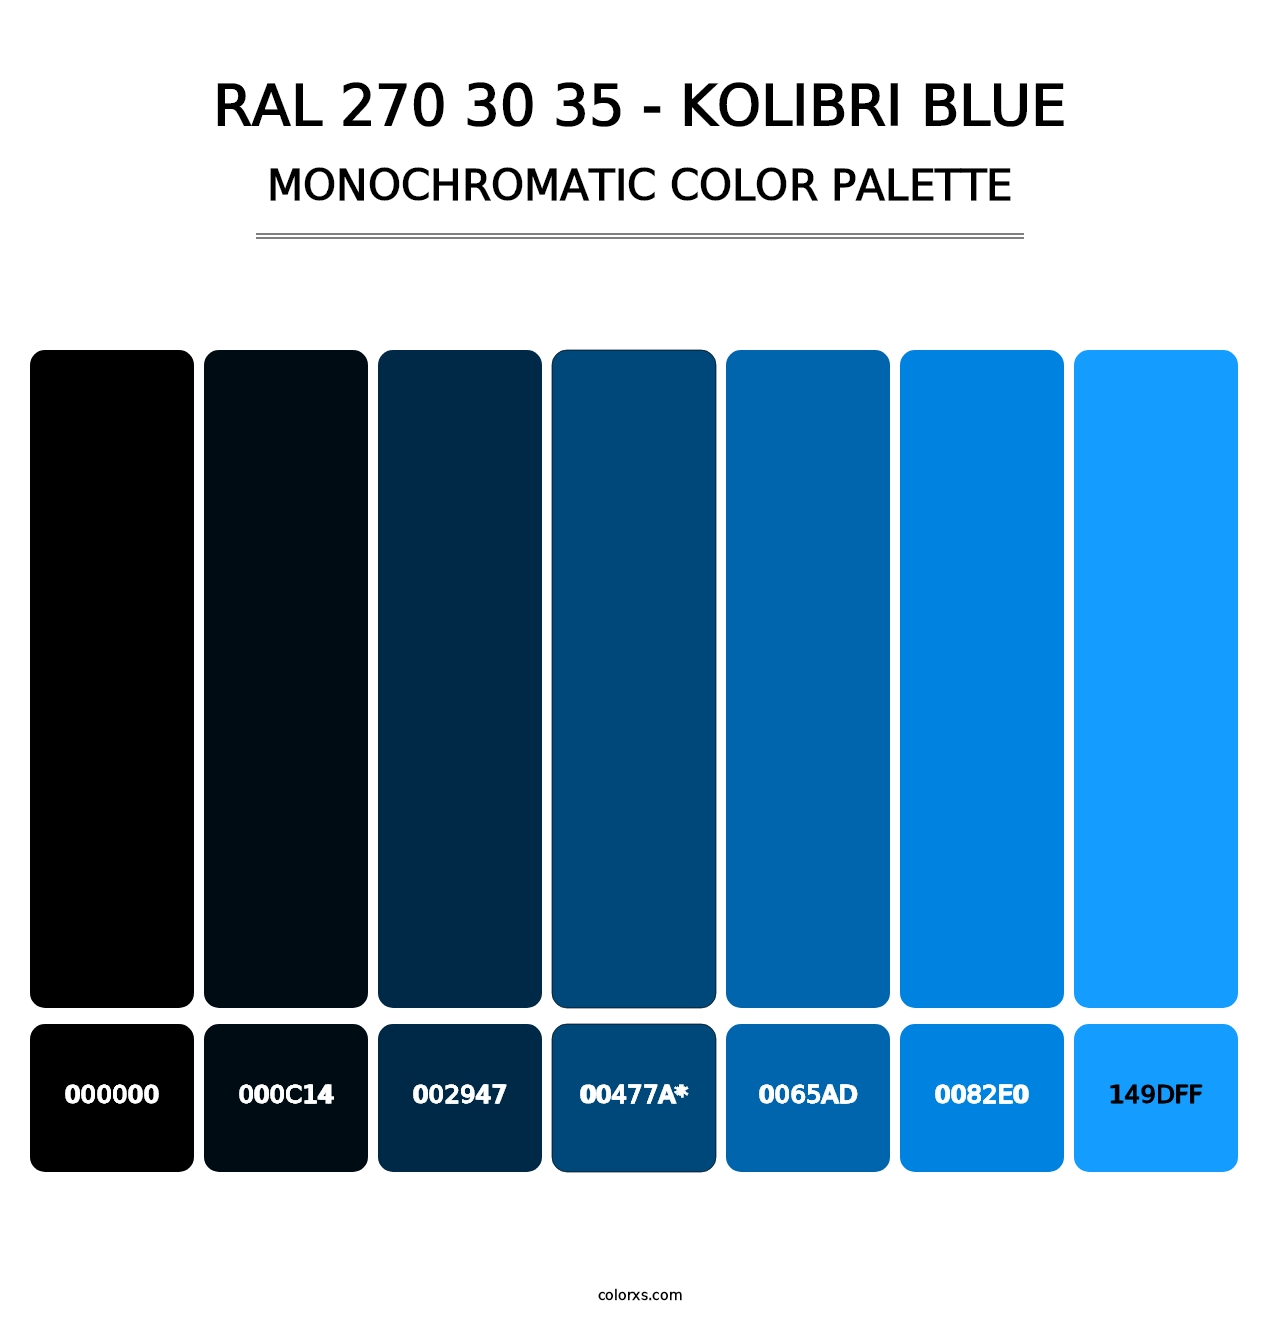 RAL 270 30 35 - Kolibri Blue - Monochromatic Color Palette